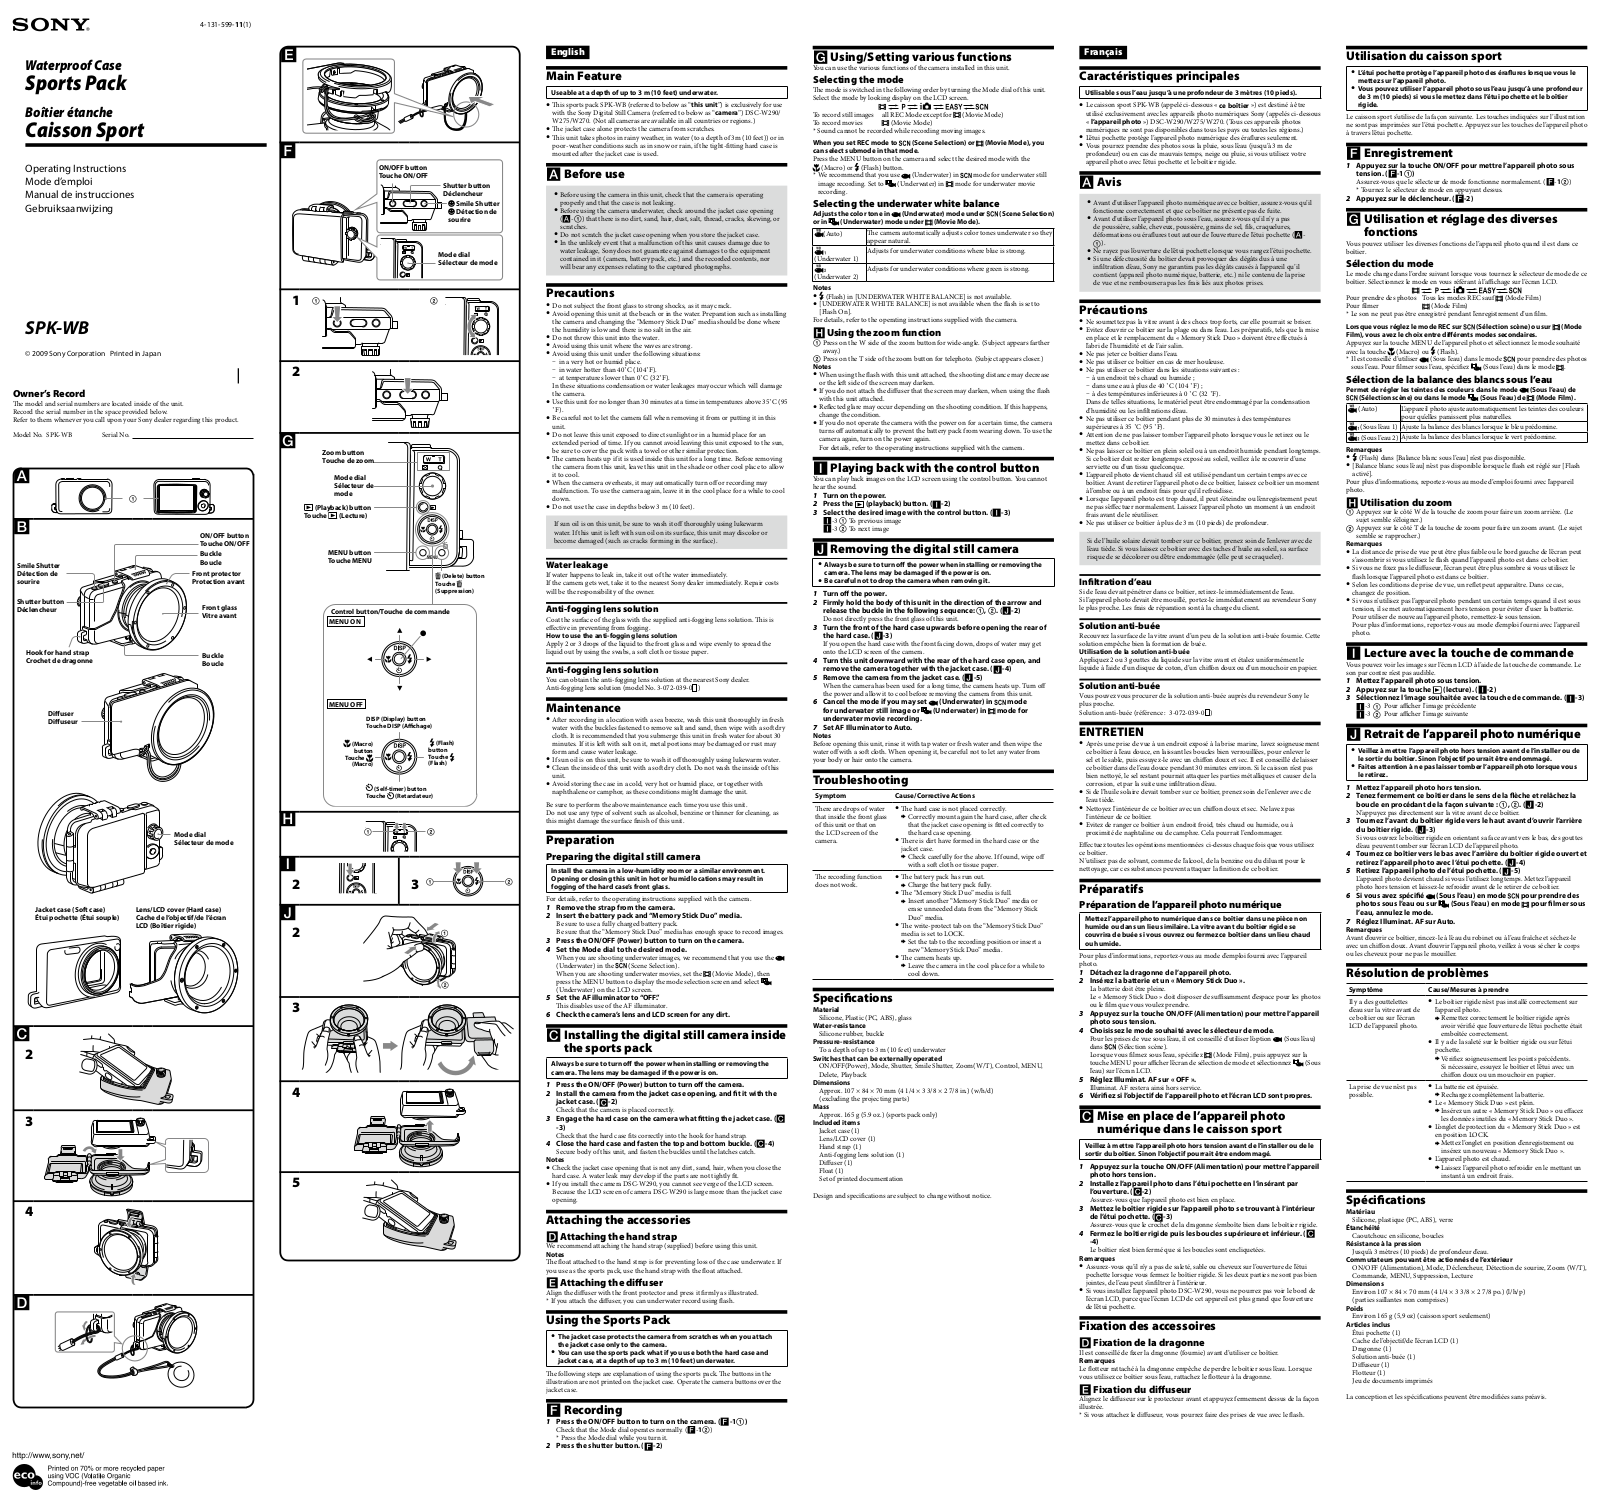 Sony SPK-WB User Manual